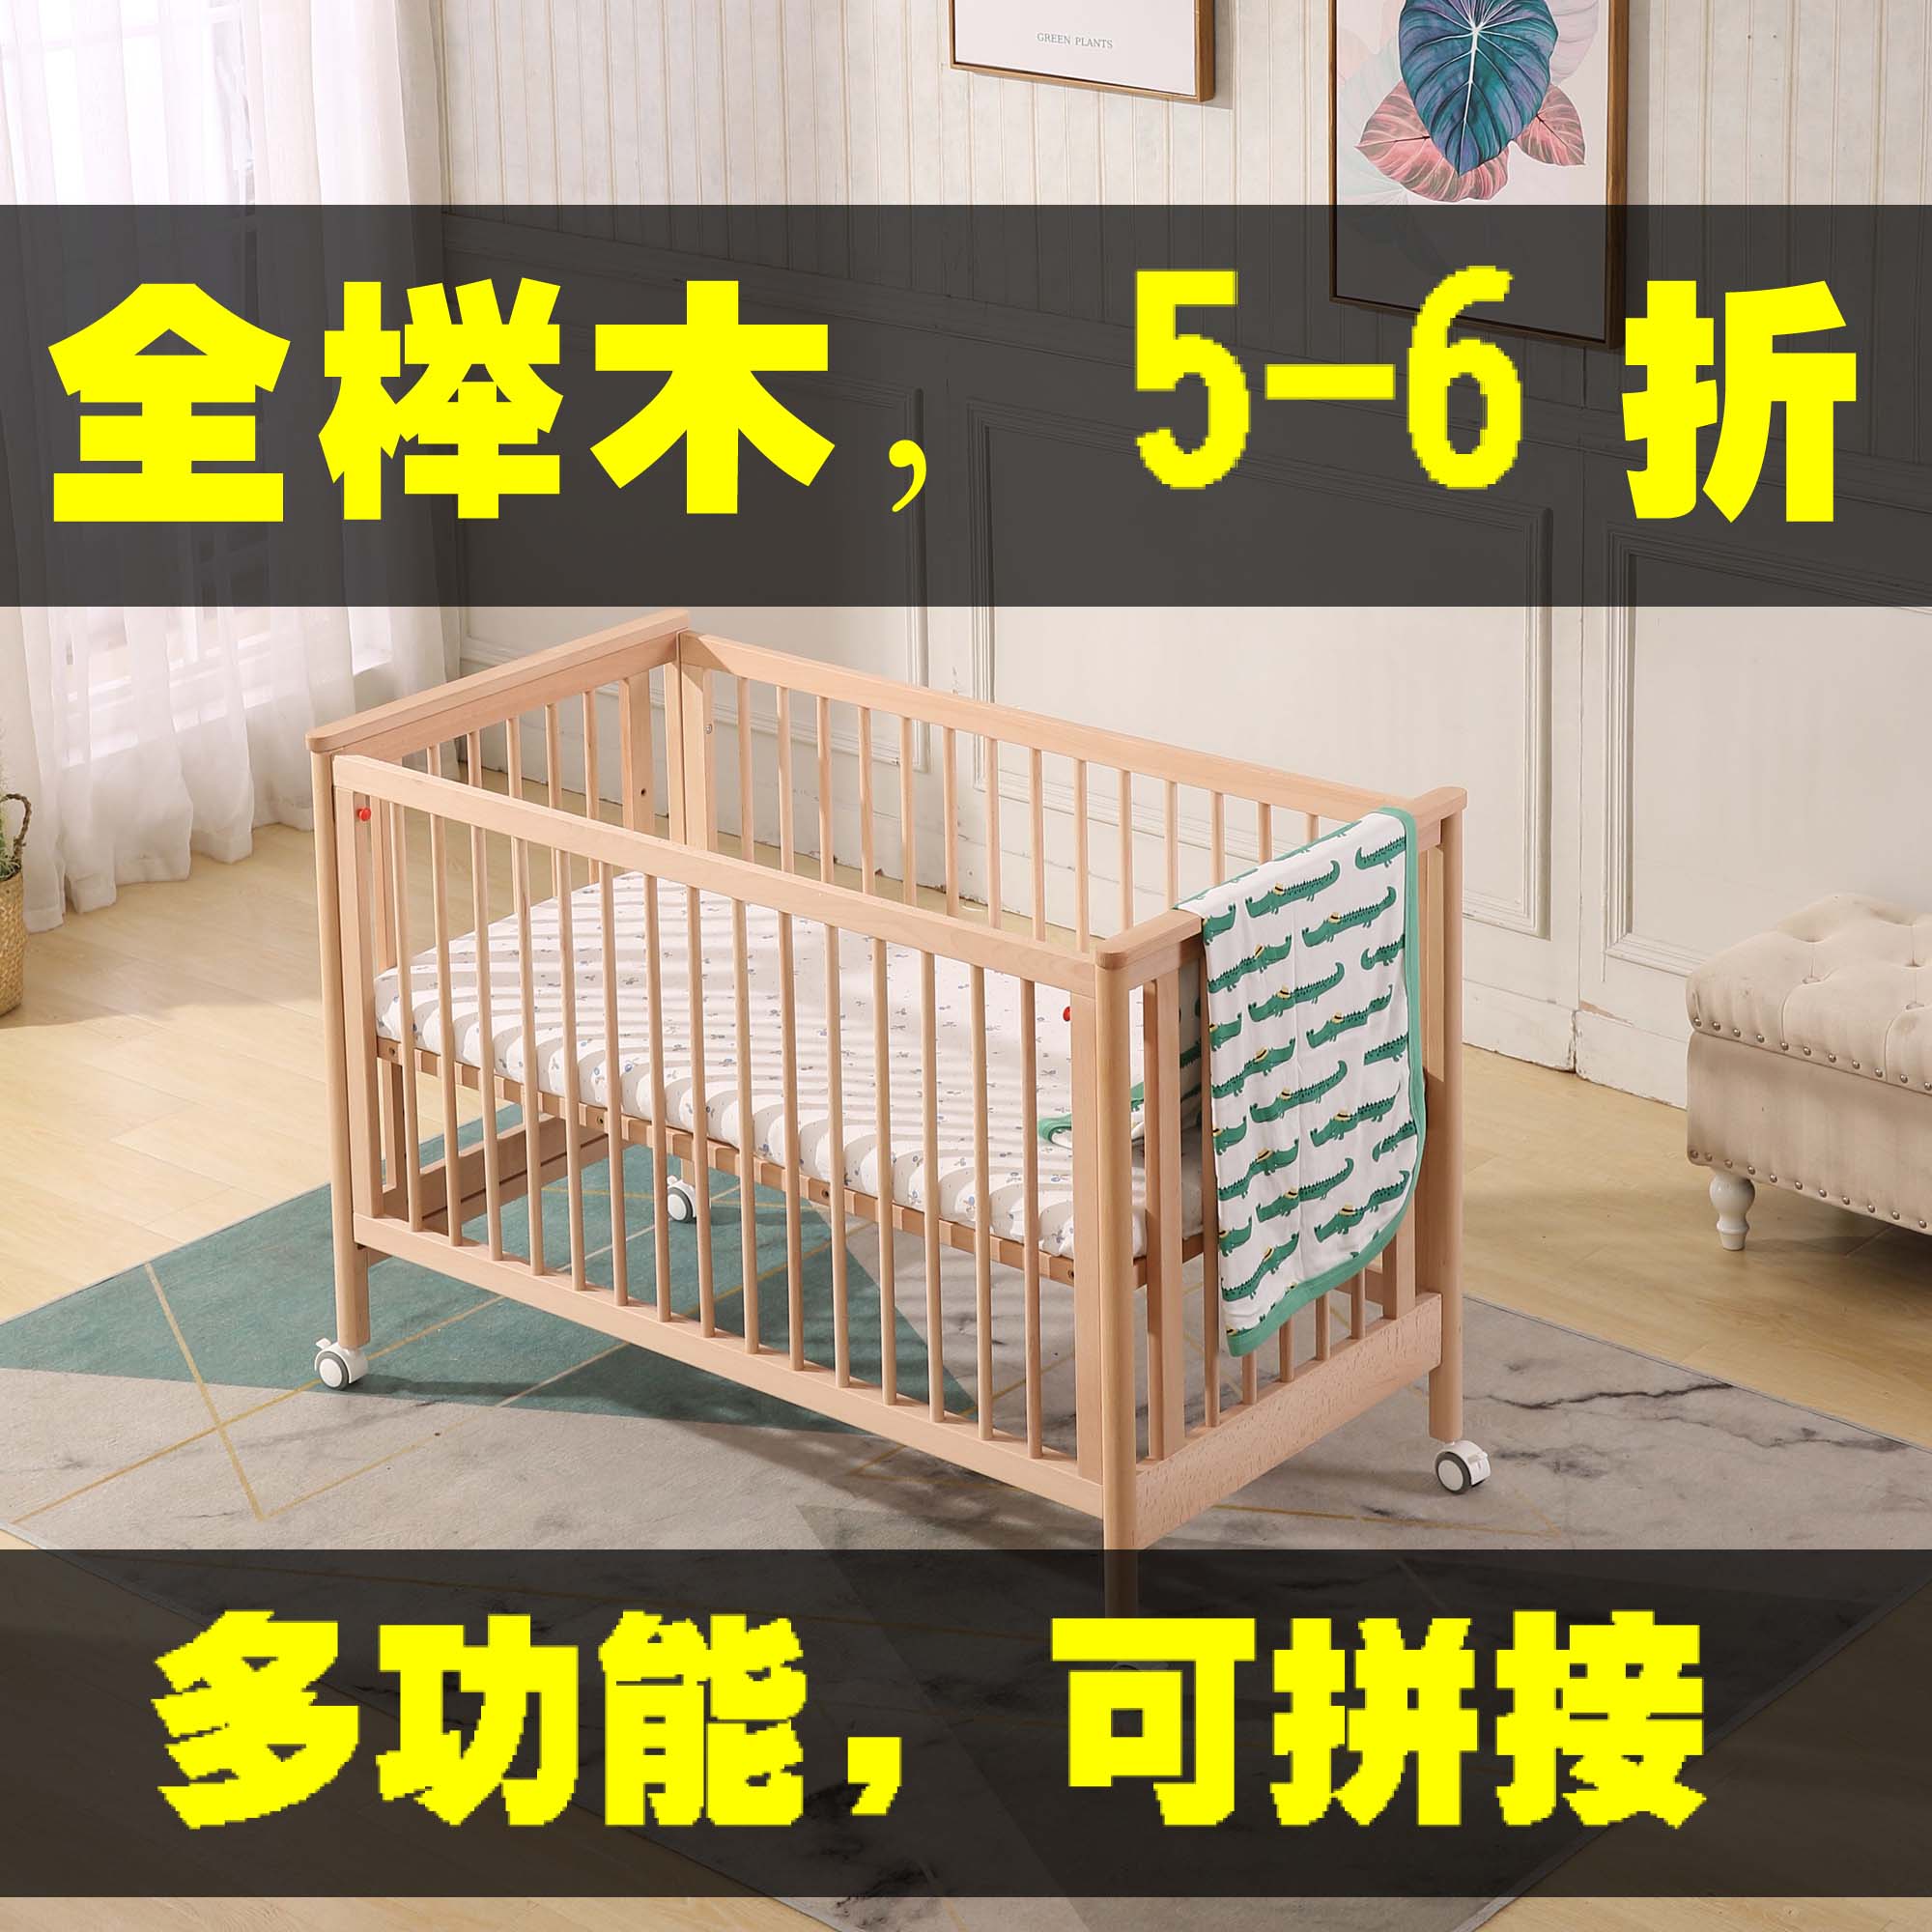 YESPPG实木榉木床边床无漆宝宝婴儿床儿童床新生儿床拼接床带轮子